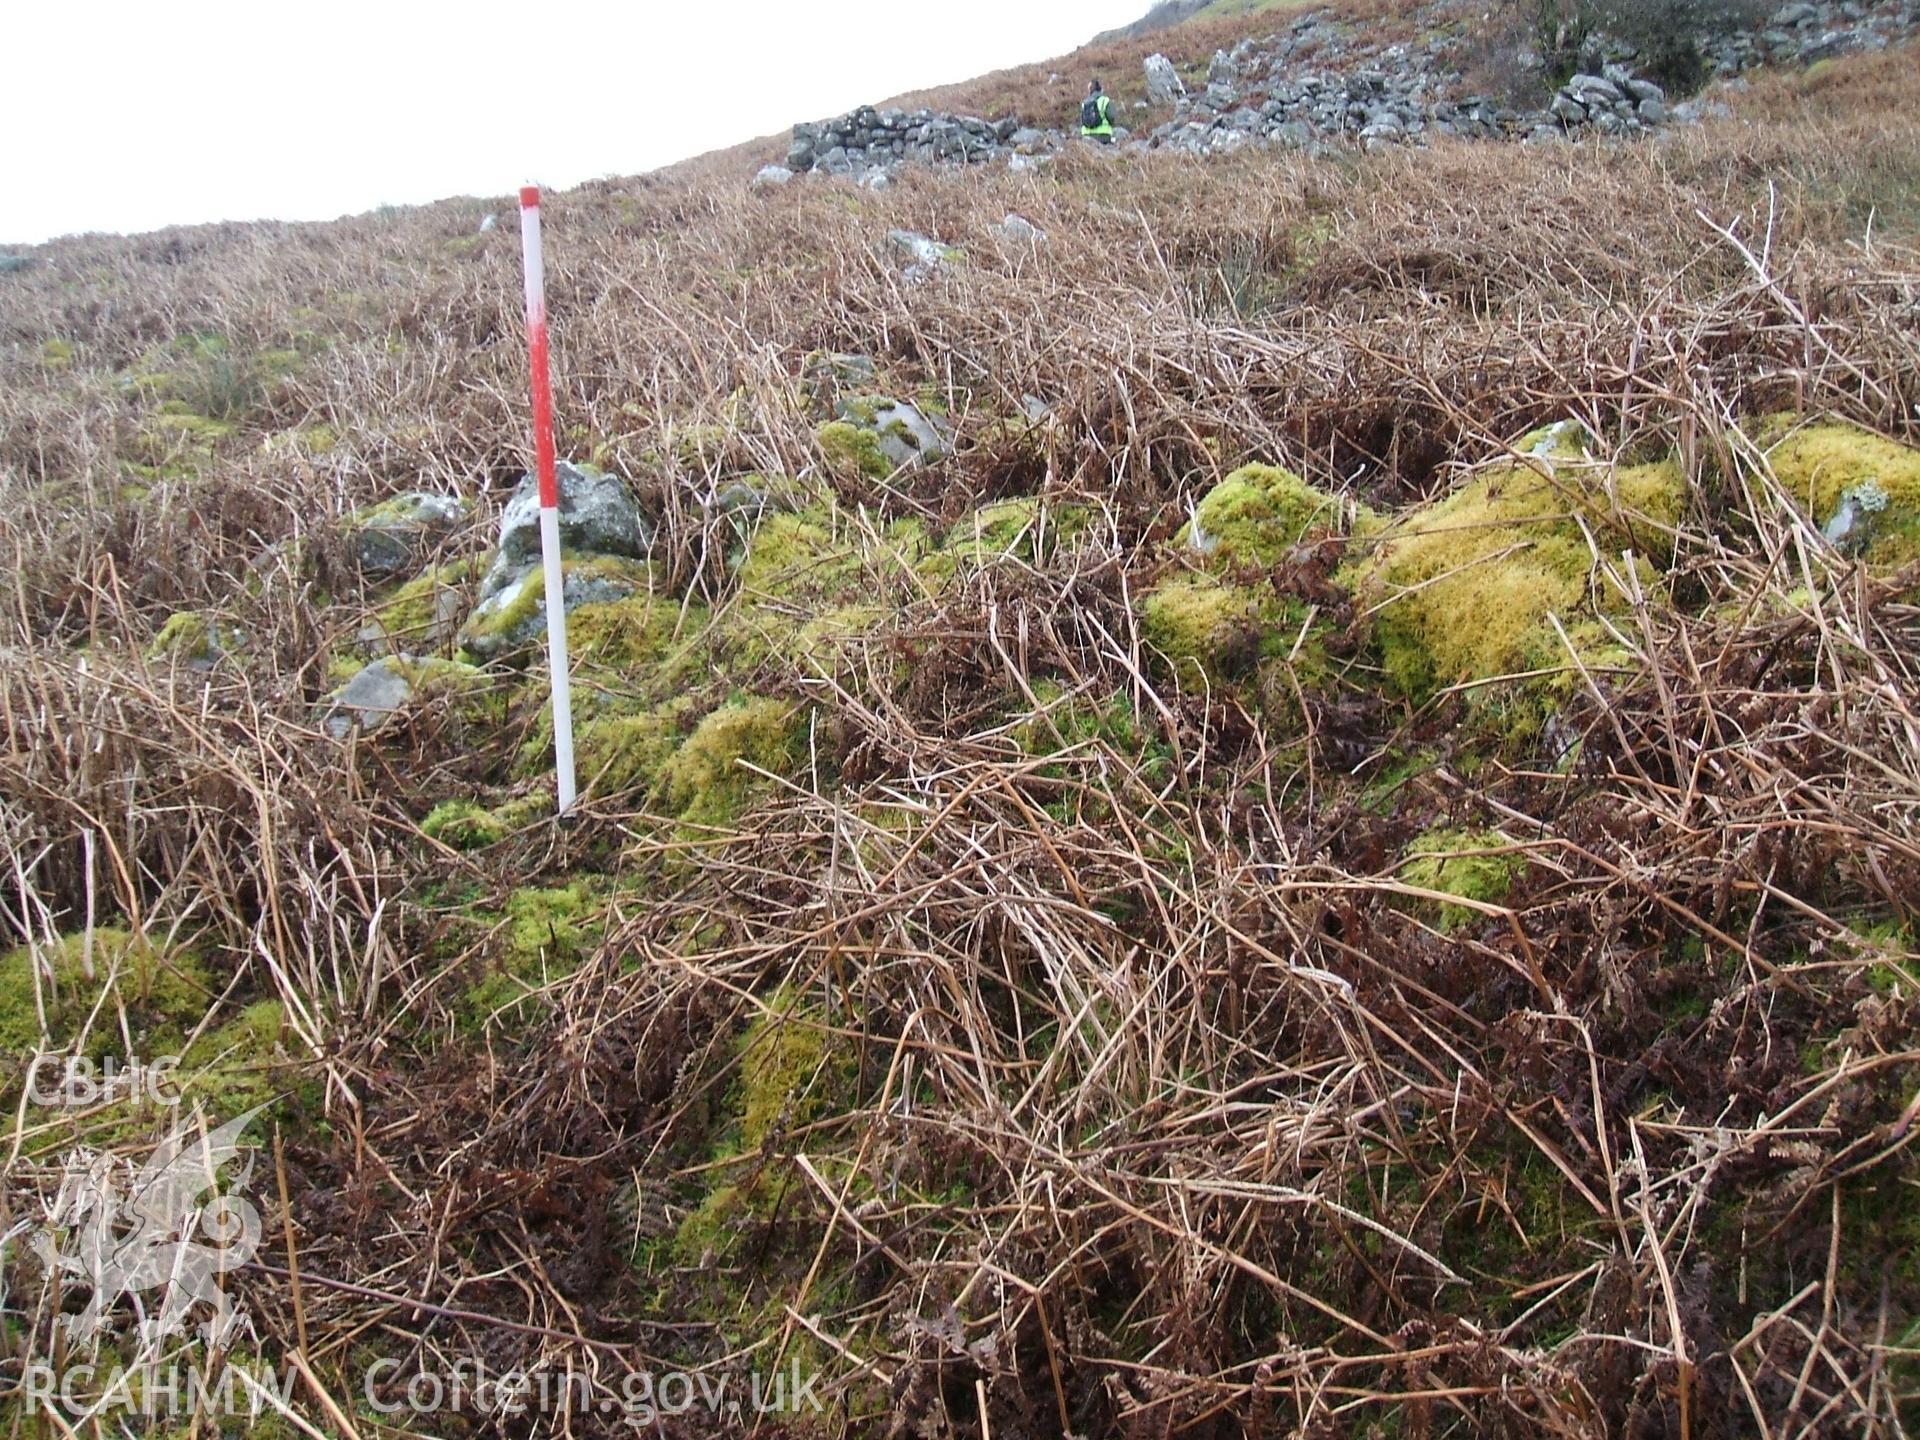 Digital colour photograph of a boundary at Blaen Cwmclaisfer II taken on 16/01/2009 by B. Britton during the Mynydd Llangynidr Upland Survey undertaken by ArchaeoPhysica.